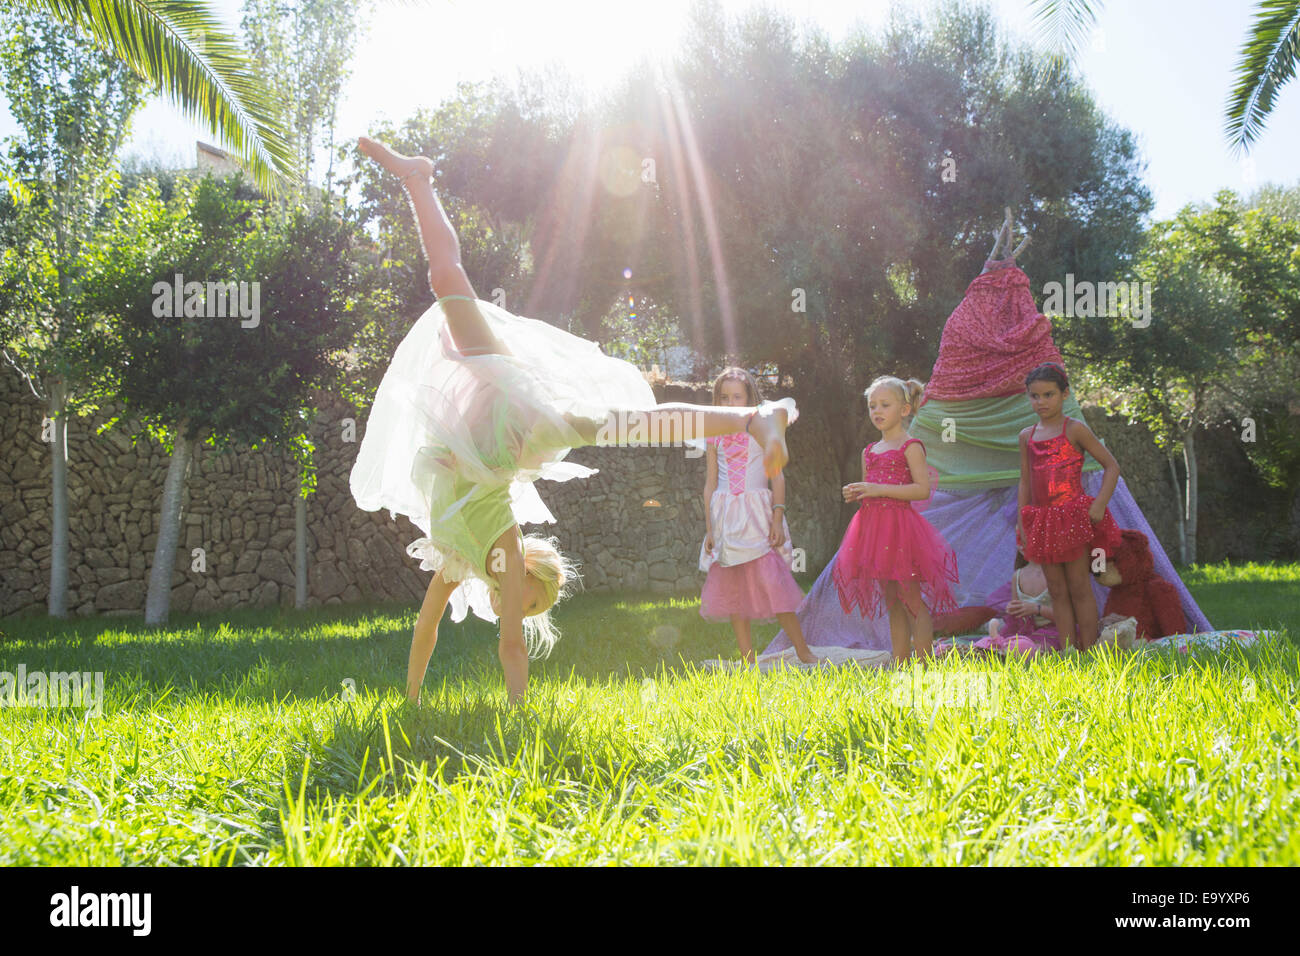 Girls watching friend in fairy costume doing cartwheel in garden Stock Photo